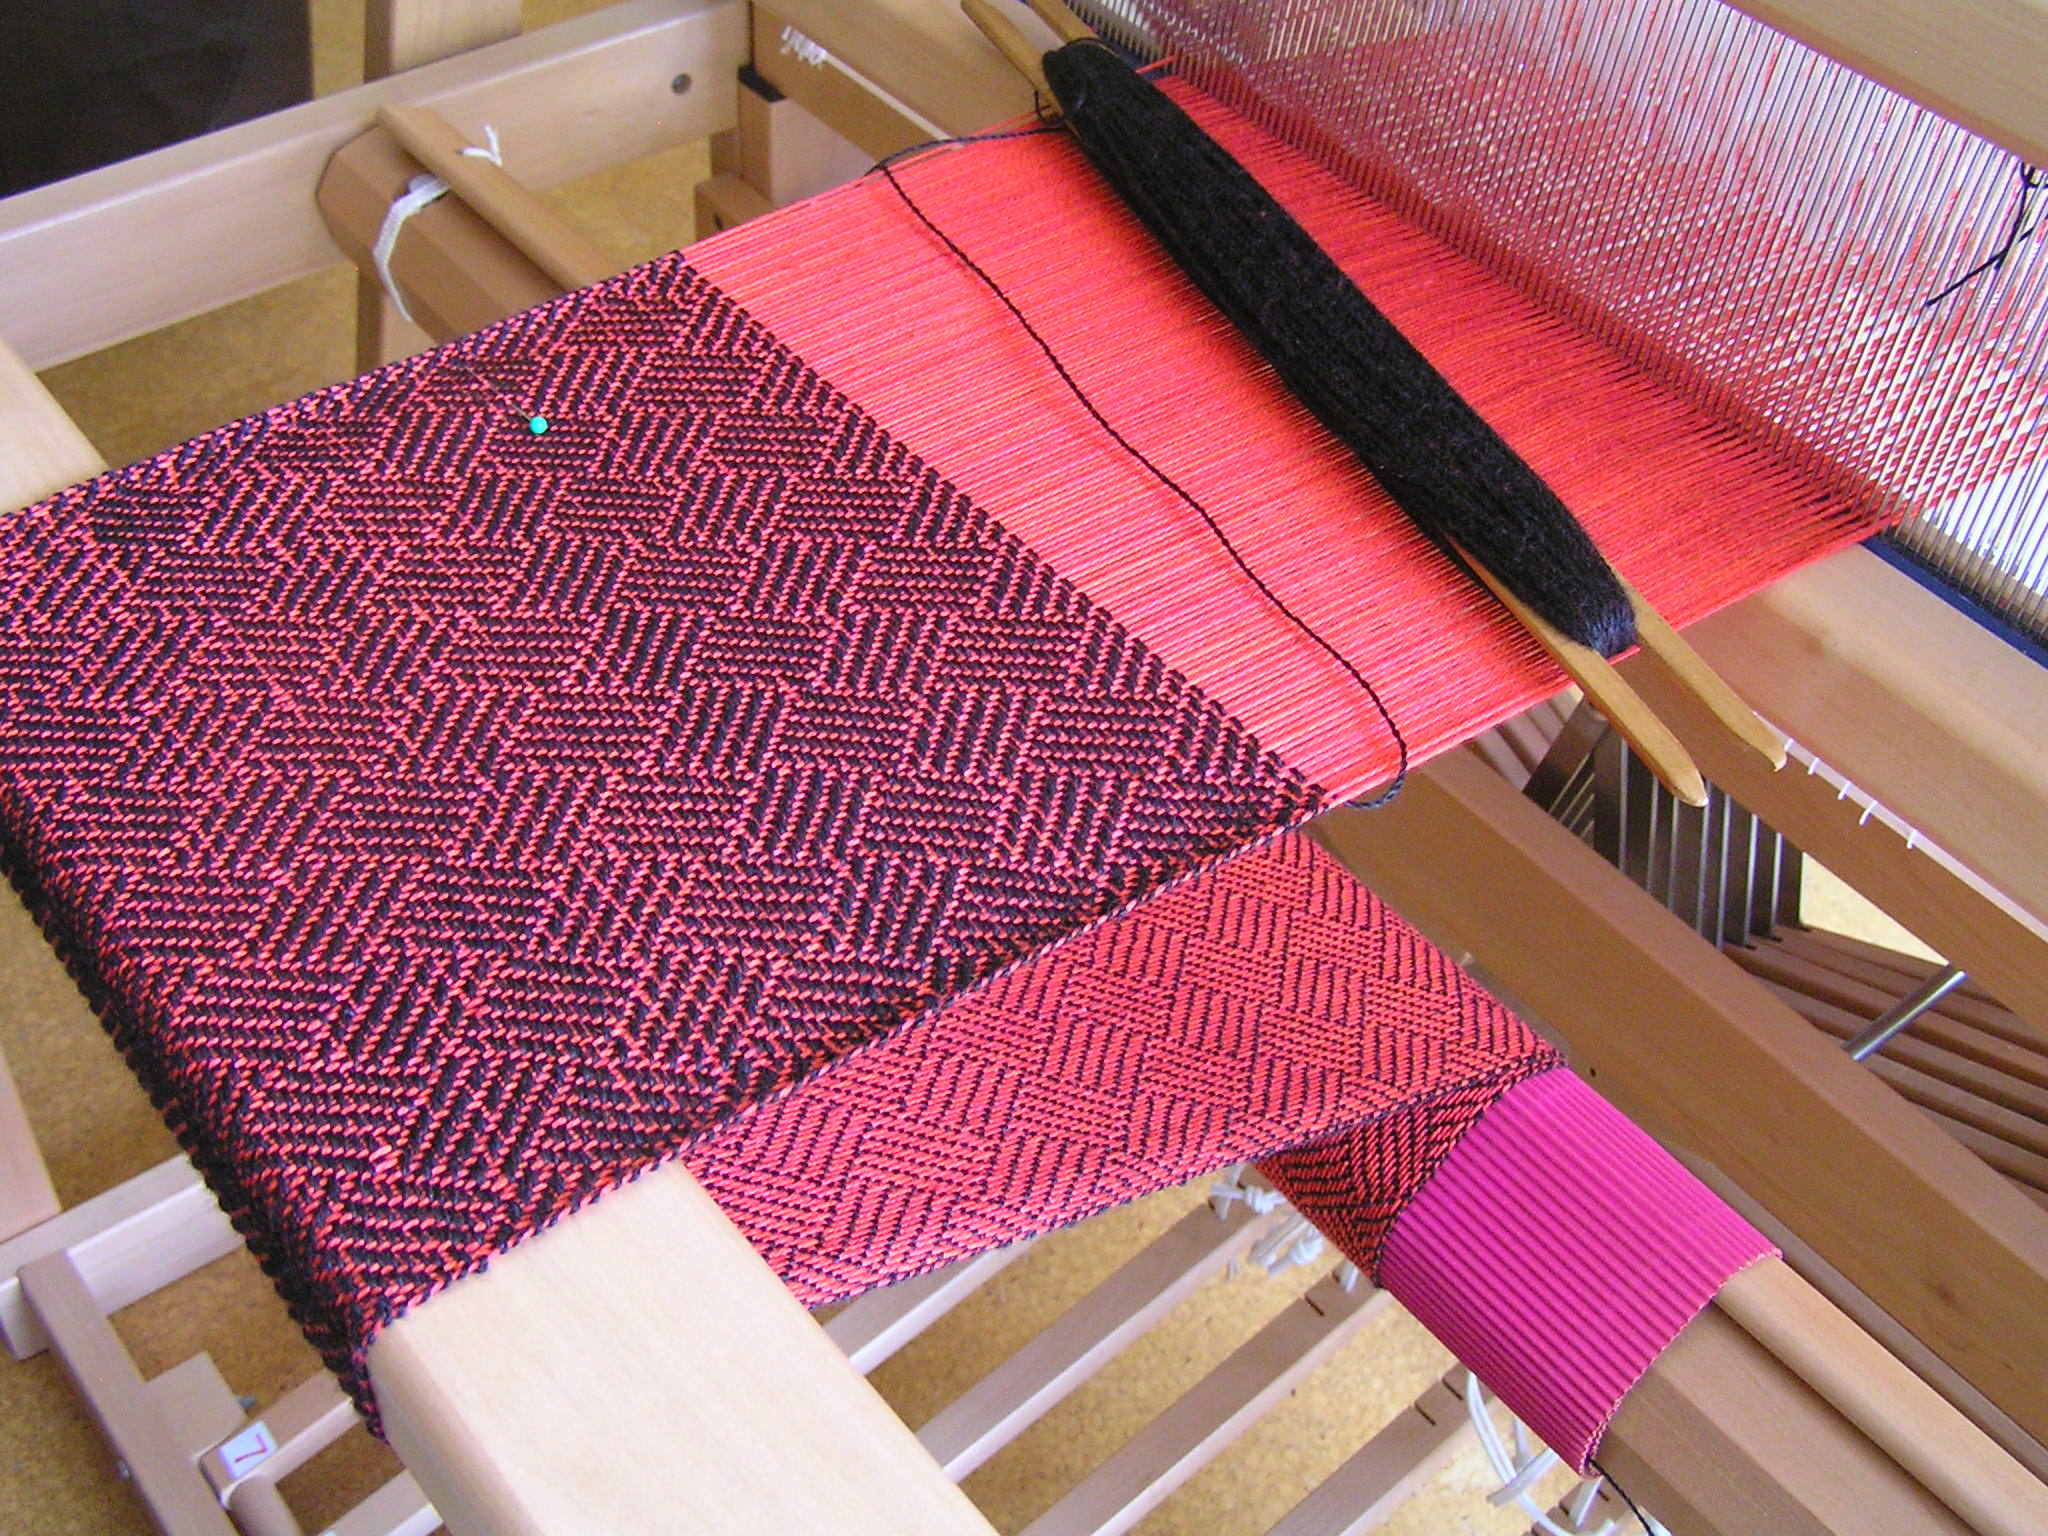 Red silk and black alpaca braided twill scarf in progress